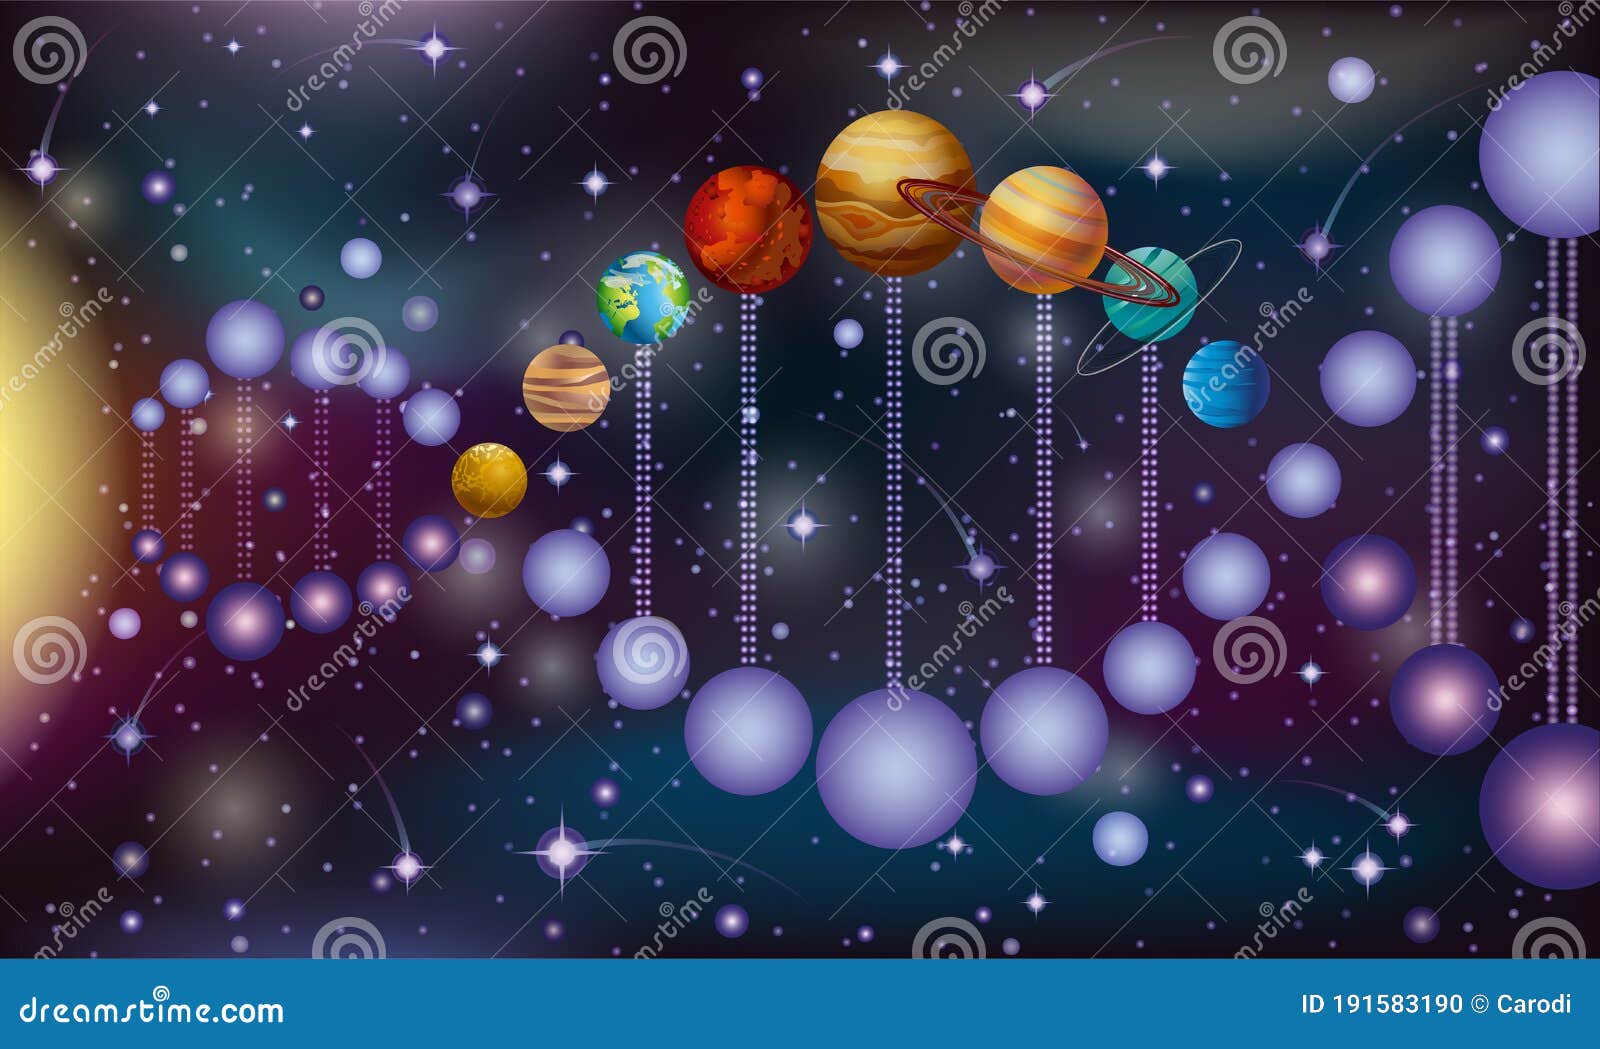 deoxyribonucleic acid dna planets solar system